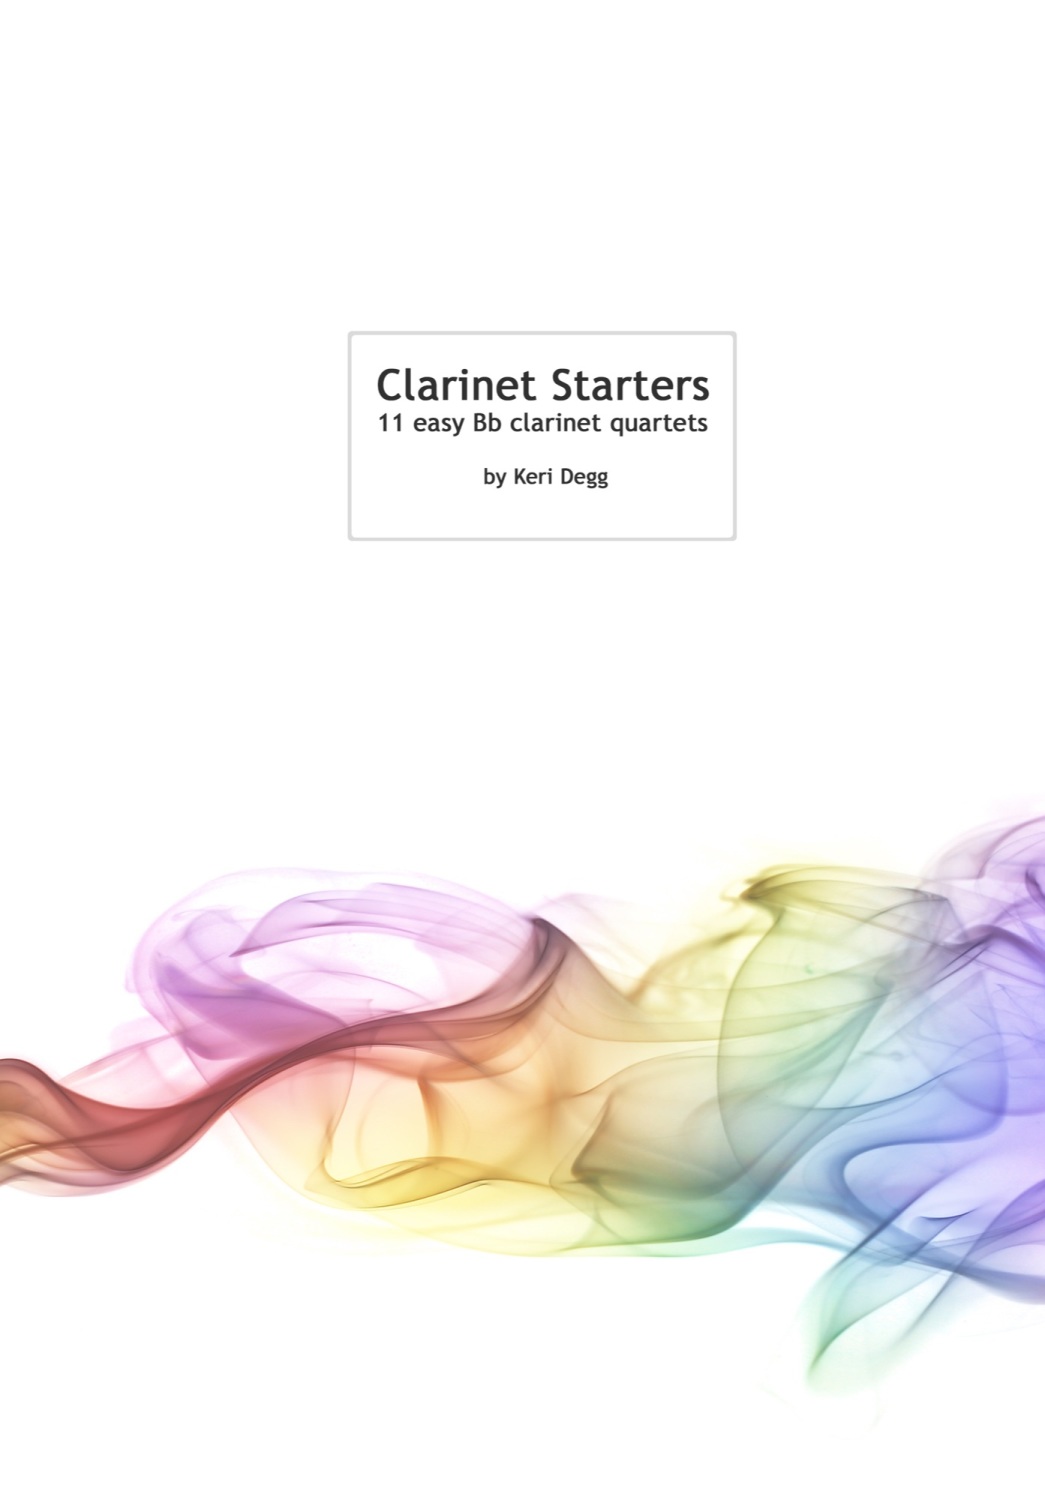 Clarinet Starters 11 Easy Bb clarinet quartets by Keri Degg